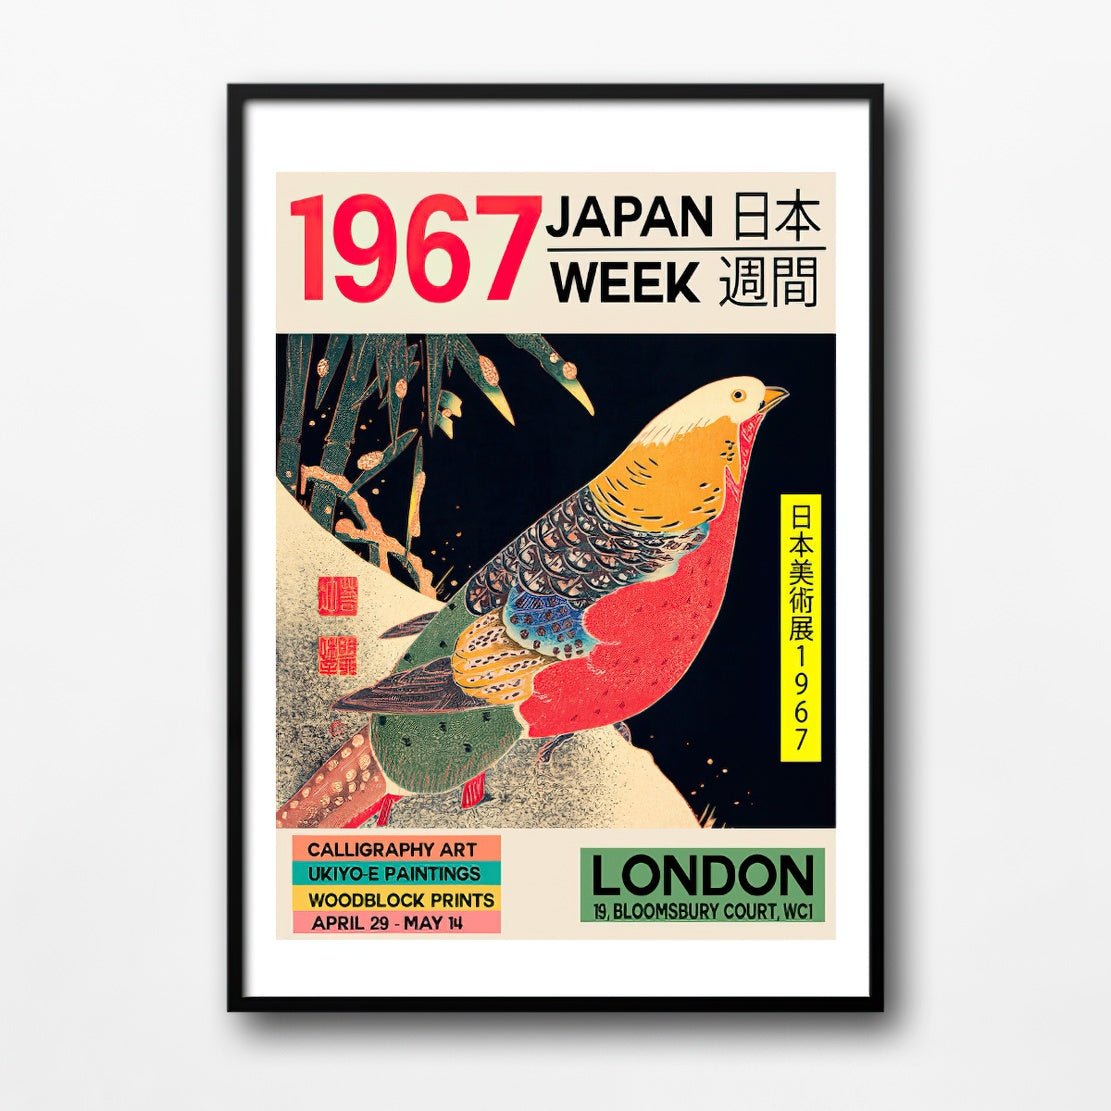 Retro vintage Japanese art poster